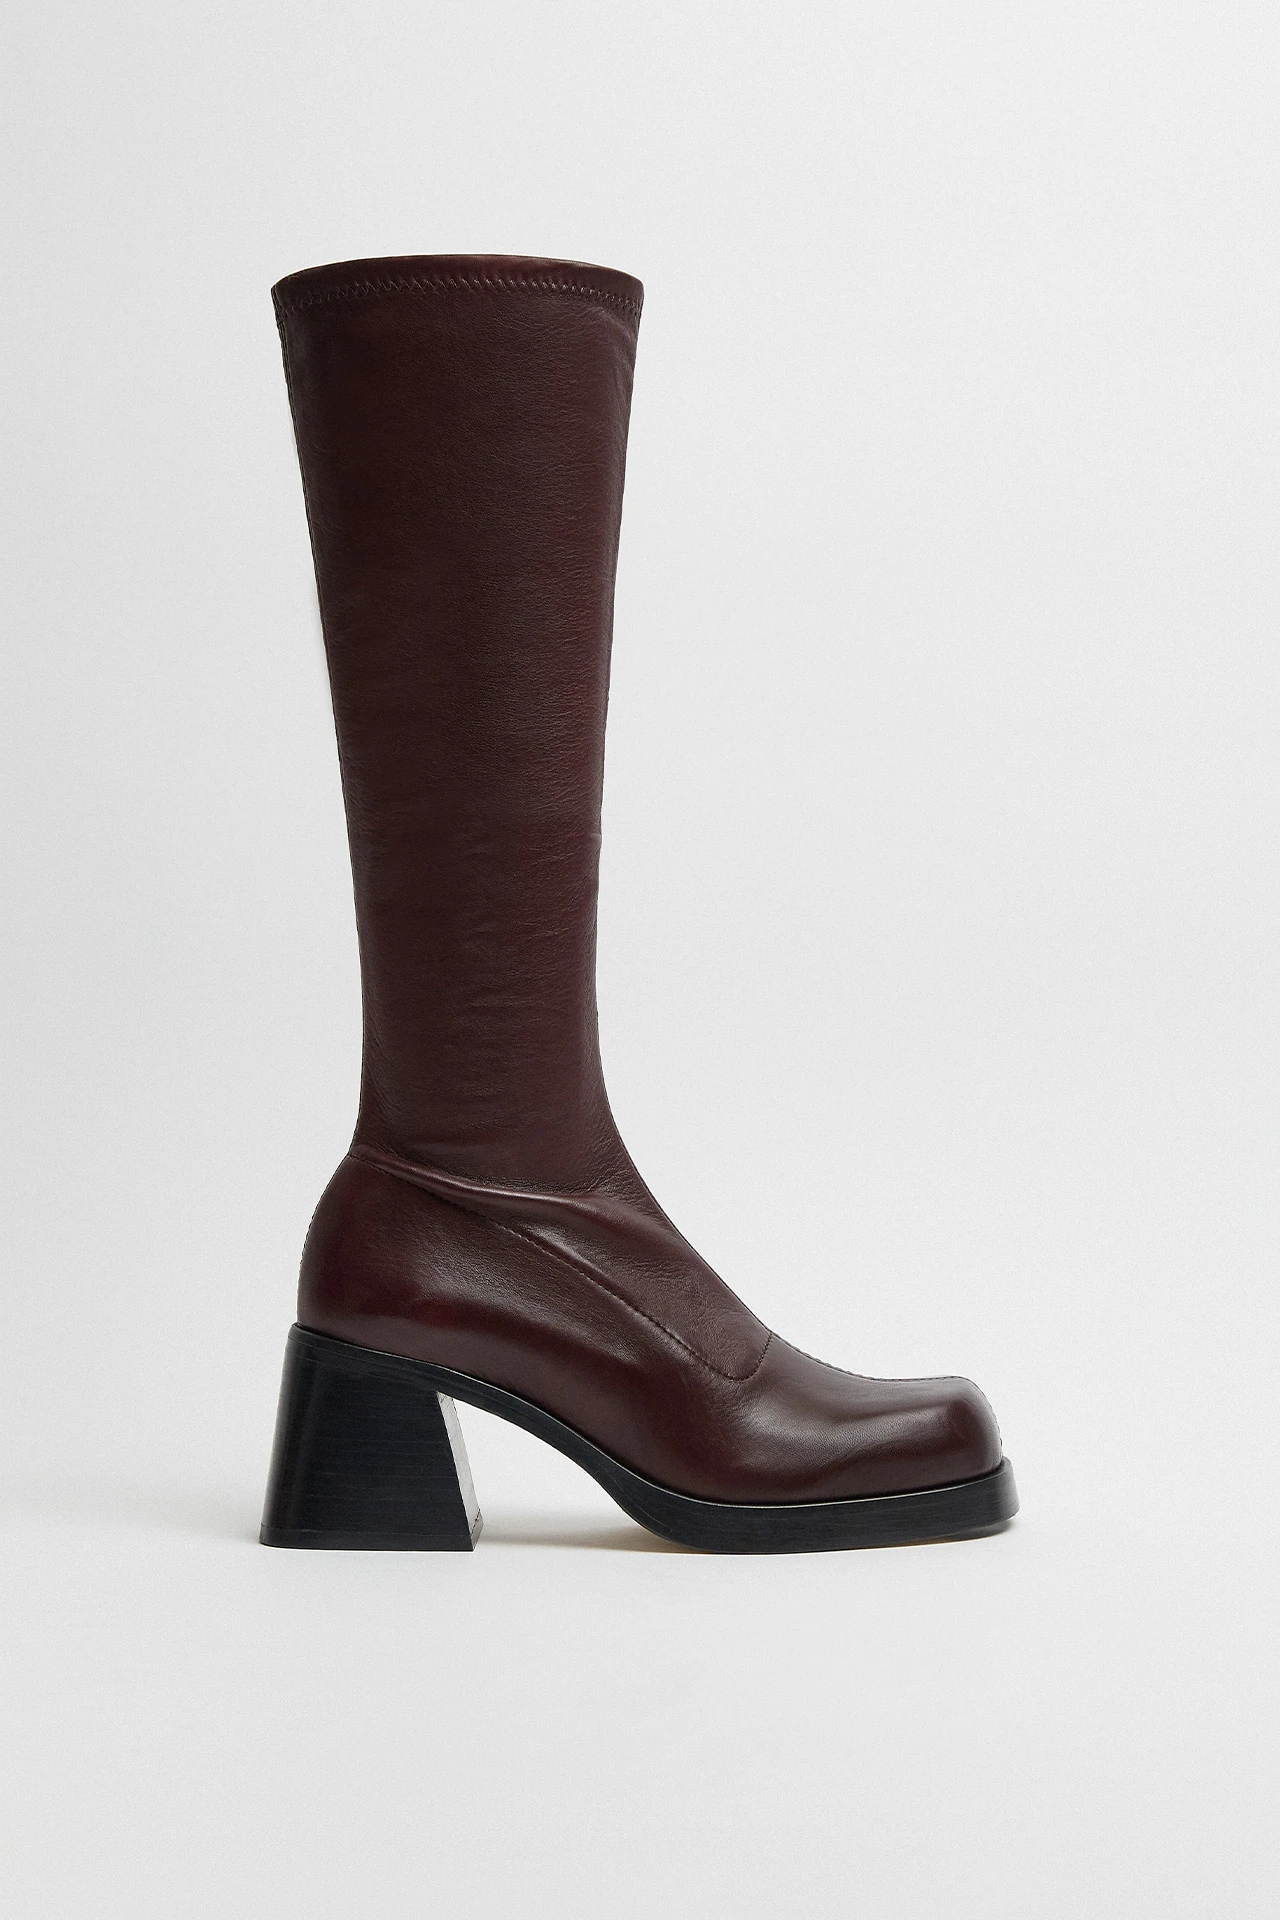 Miista-hedy-burgundy-boots-01